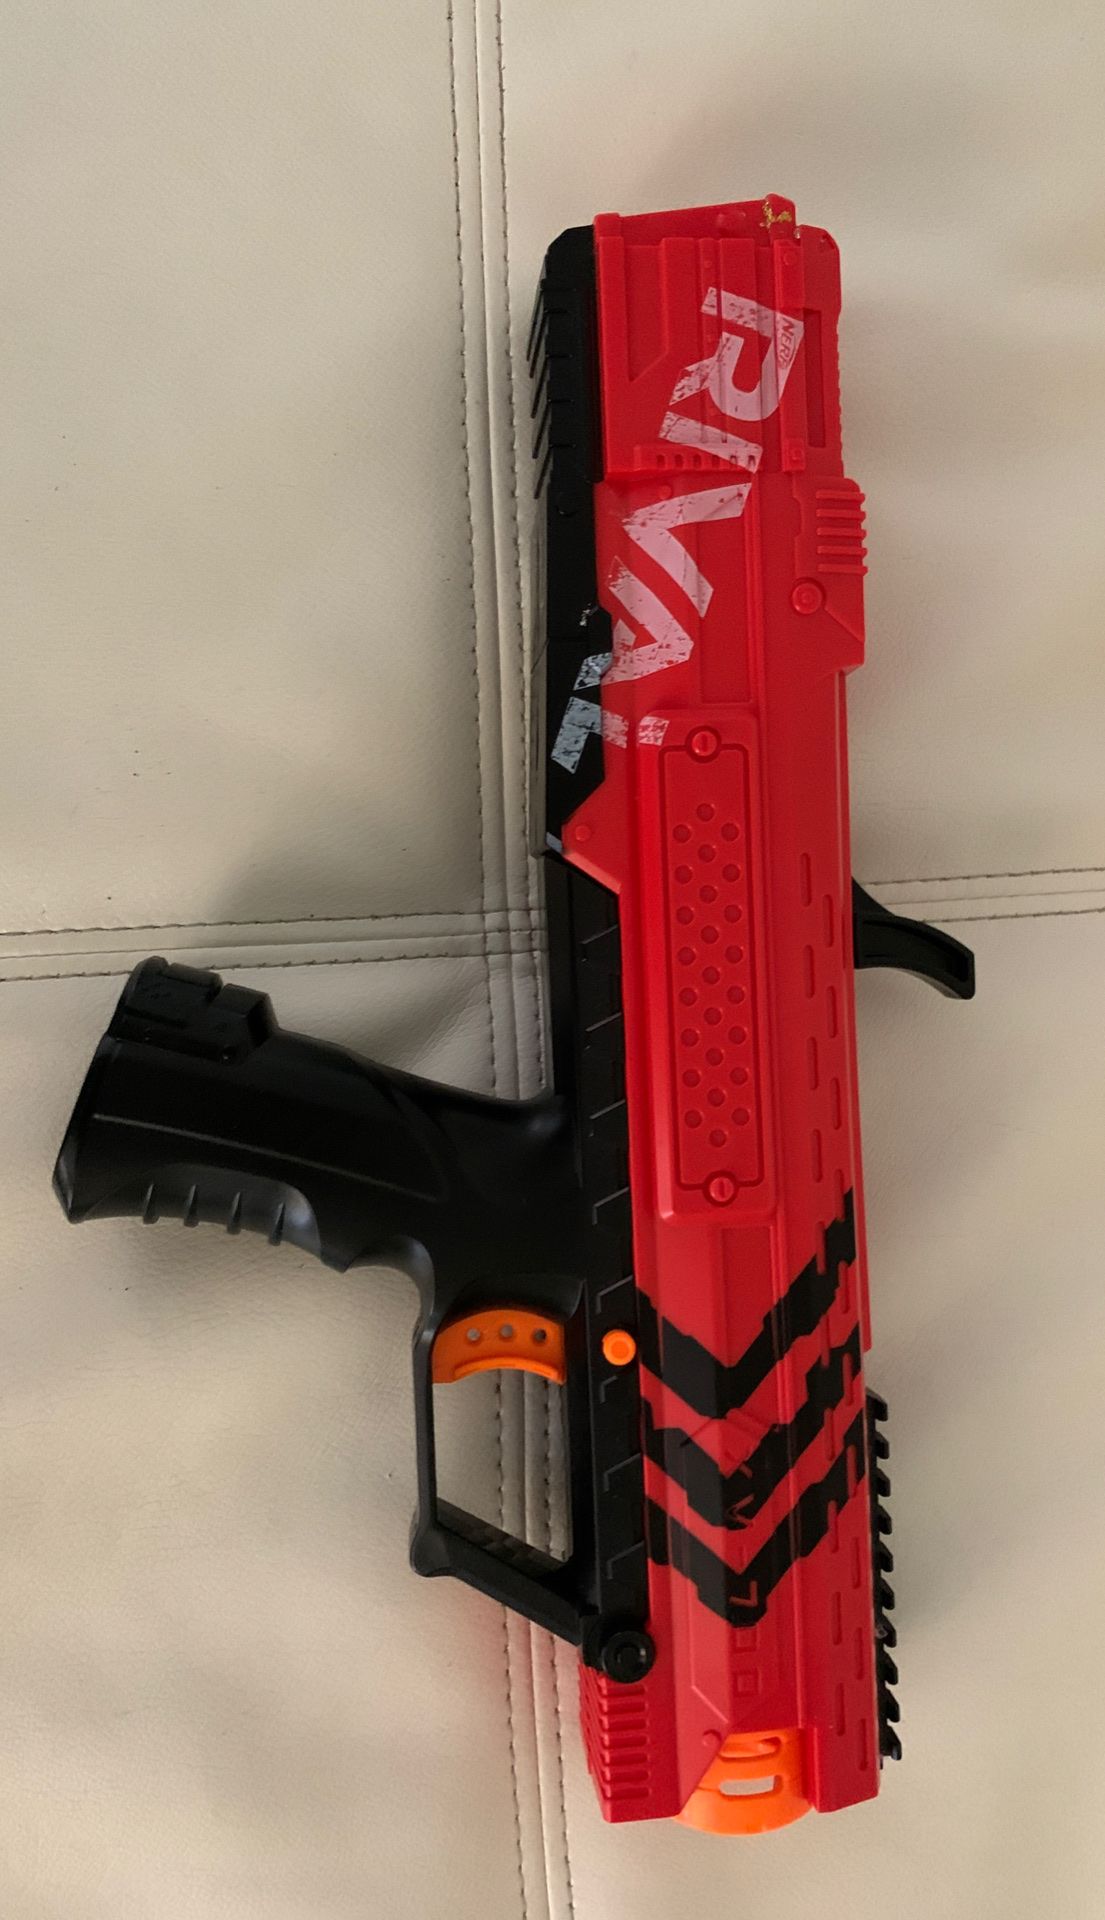 Almost new Nerf Rival nerf gun